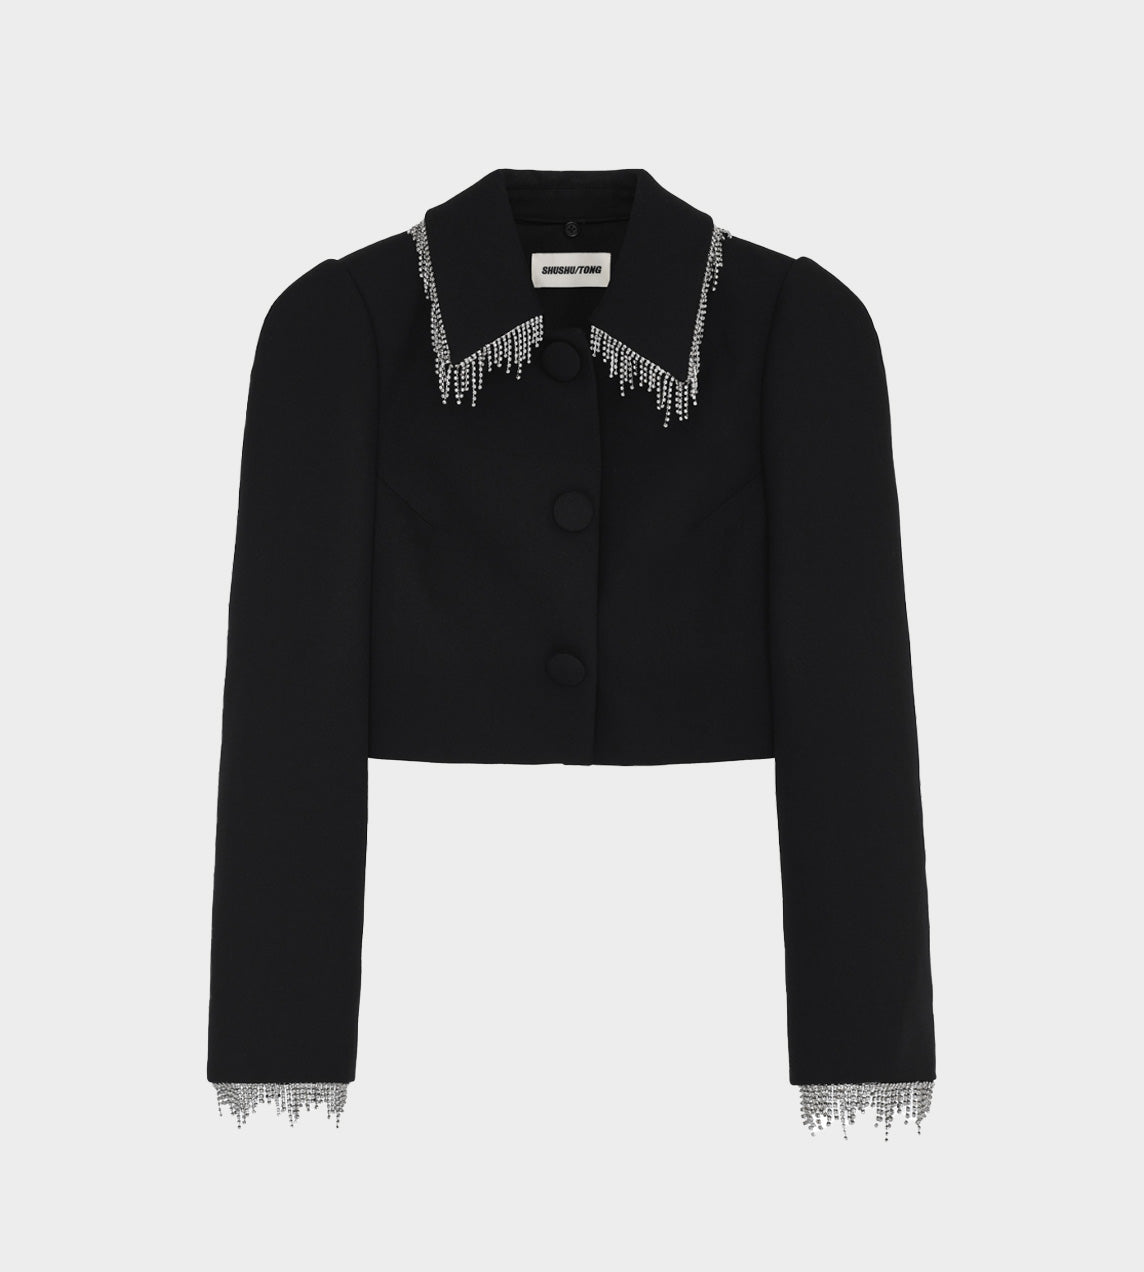 ShuShu/Tong - Decorative Collar Jacket Black